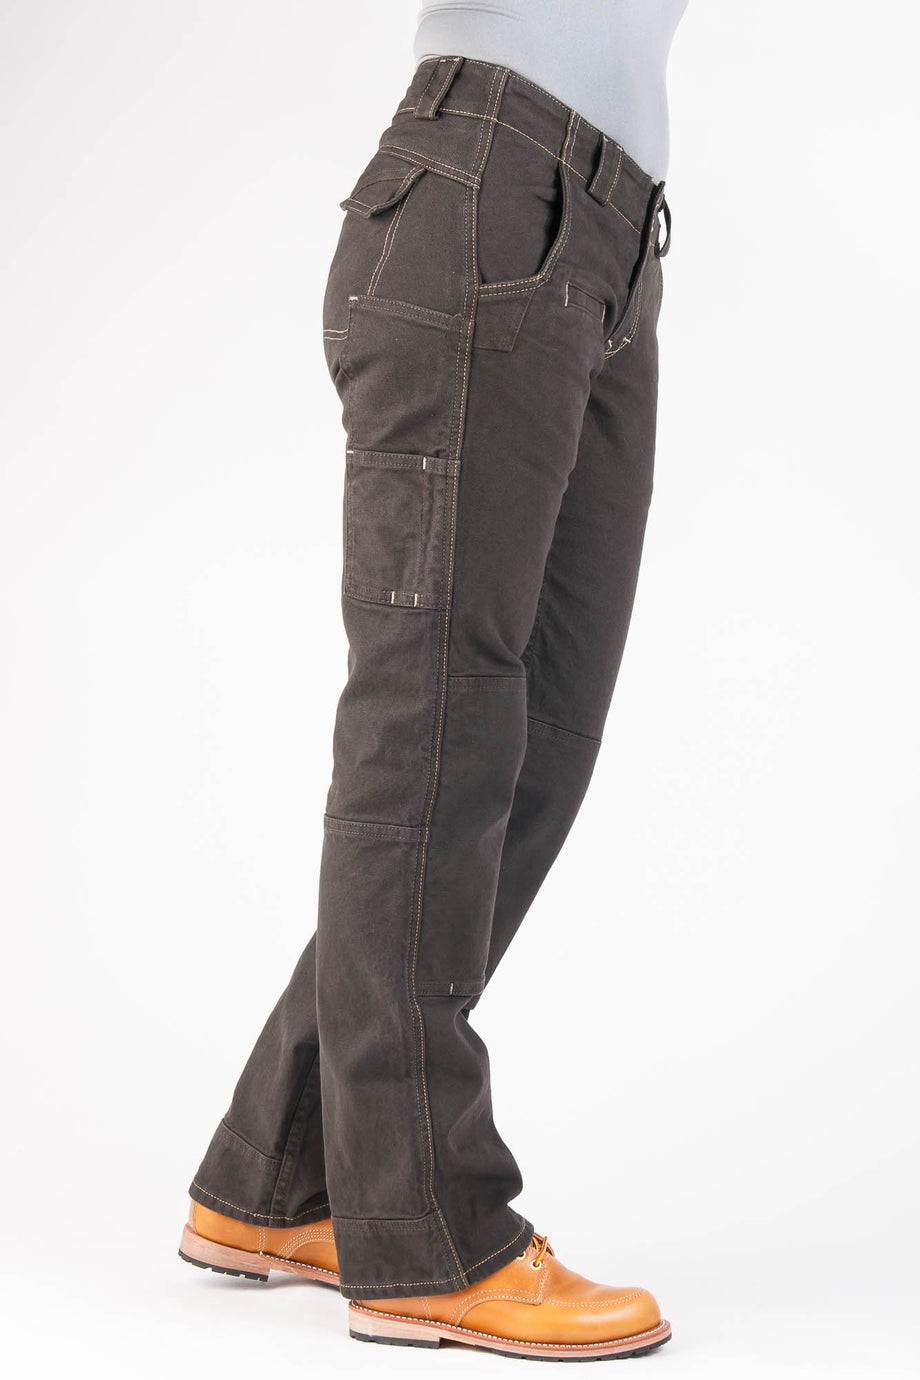 Dovetail Workwear Women's Saddle Brown Canvas Work Pants (16 X 32